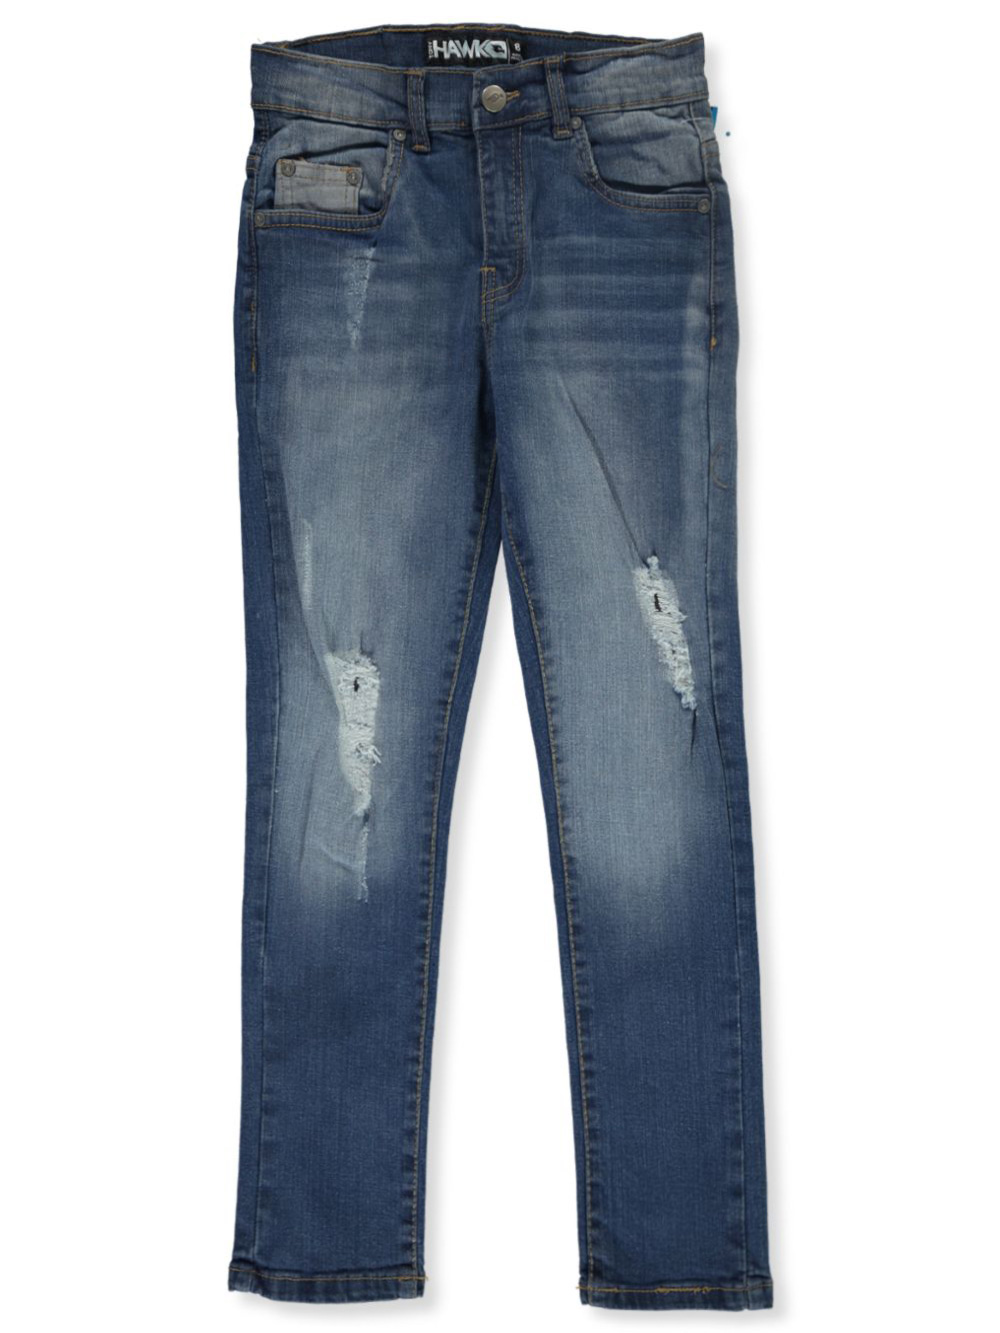 Hawk Boys' Double Back Pocket Skinny Jeans (Big Boys) - image 1 of 2